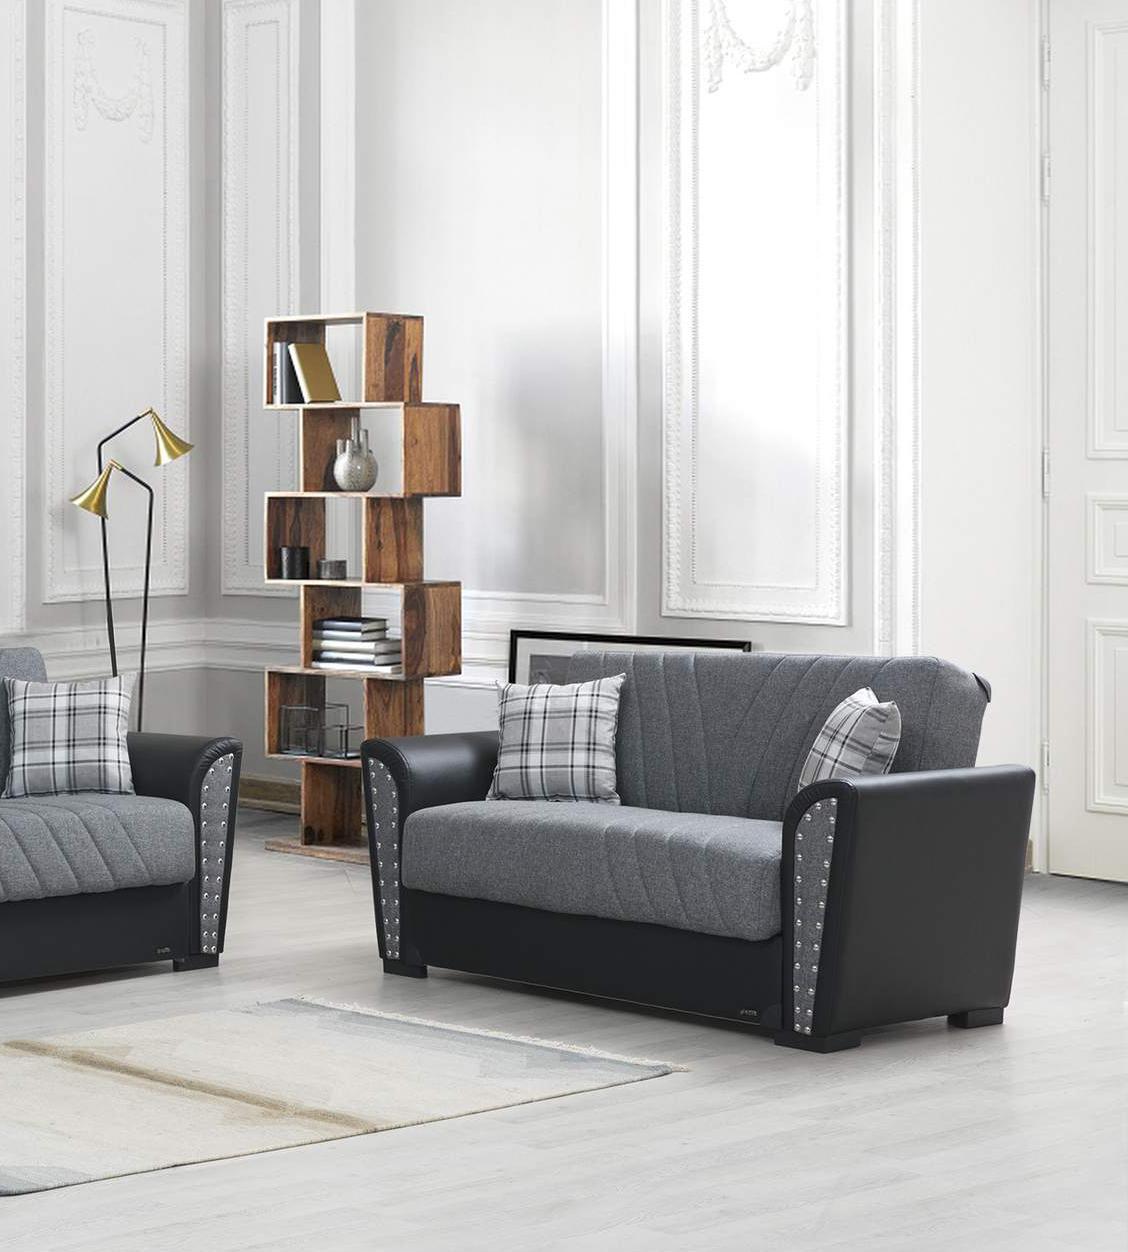 

                    
Alpha Furniture Salinas Sofa and Loveseat Set Black/Gray Fabric Purchase 
